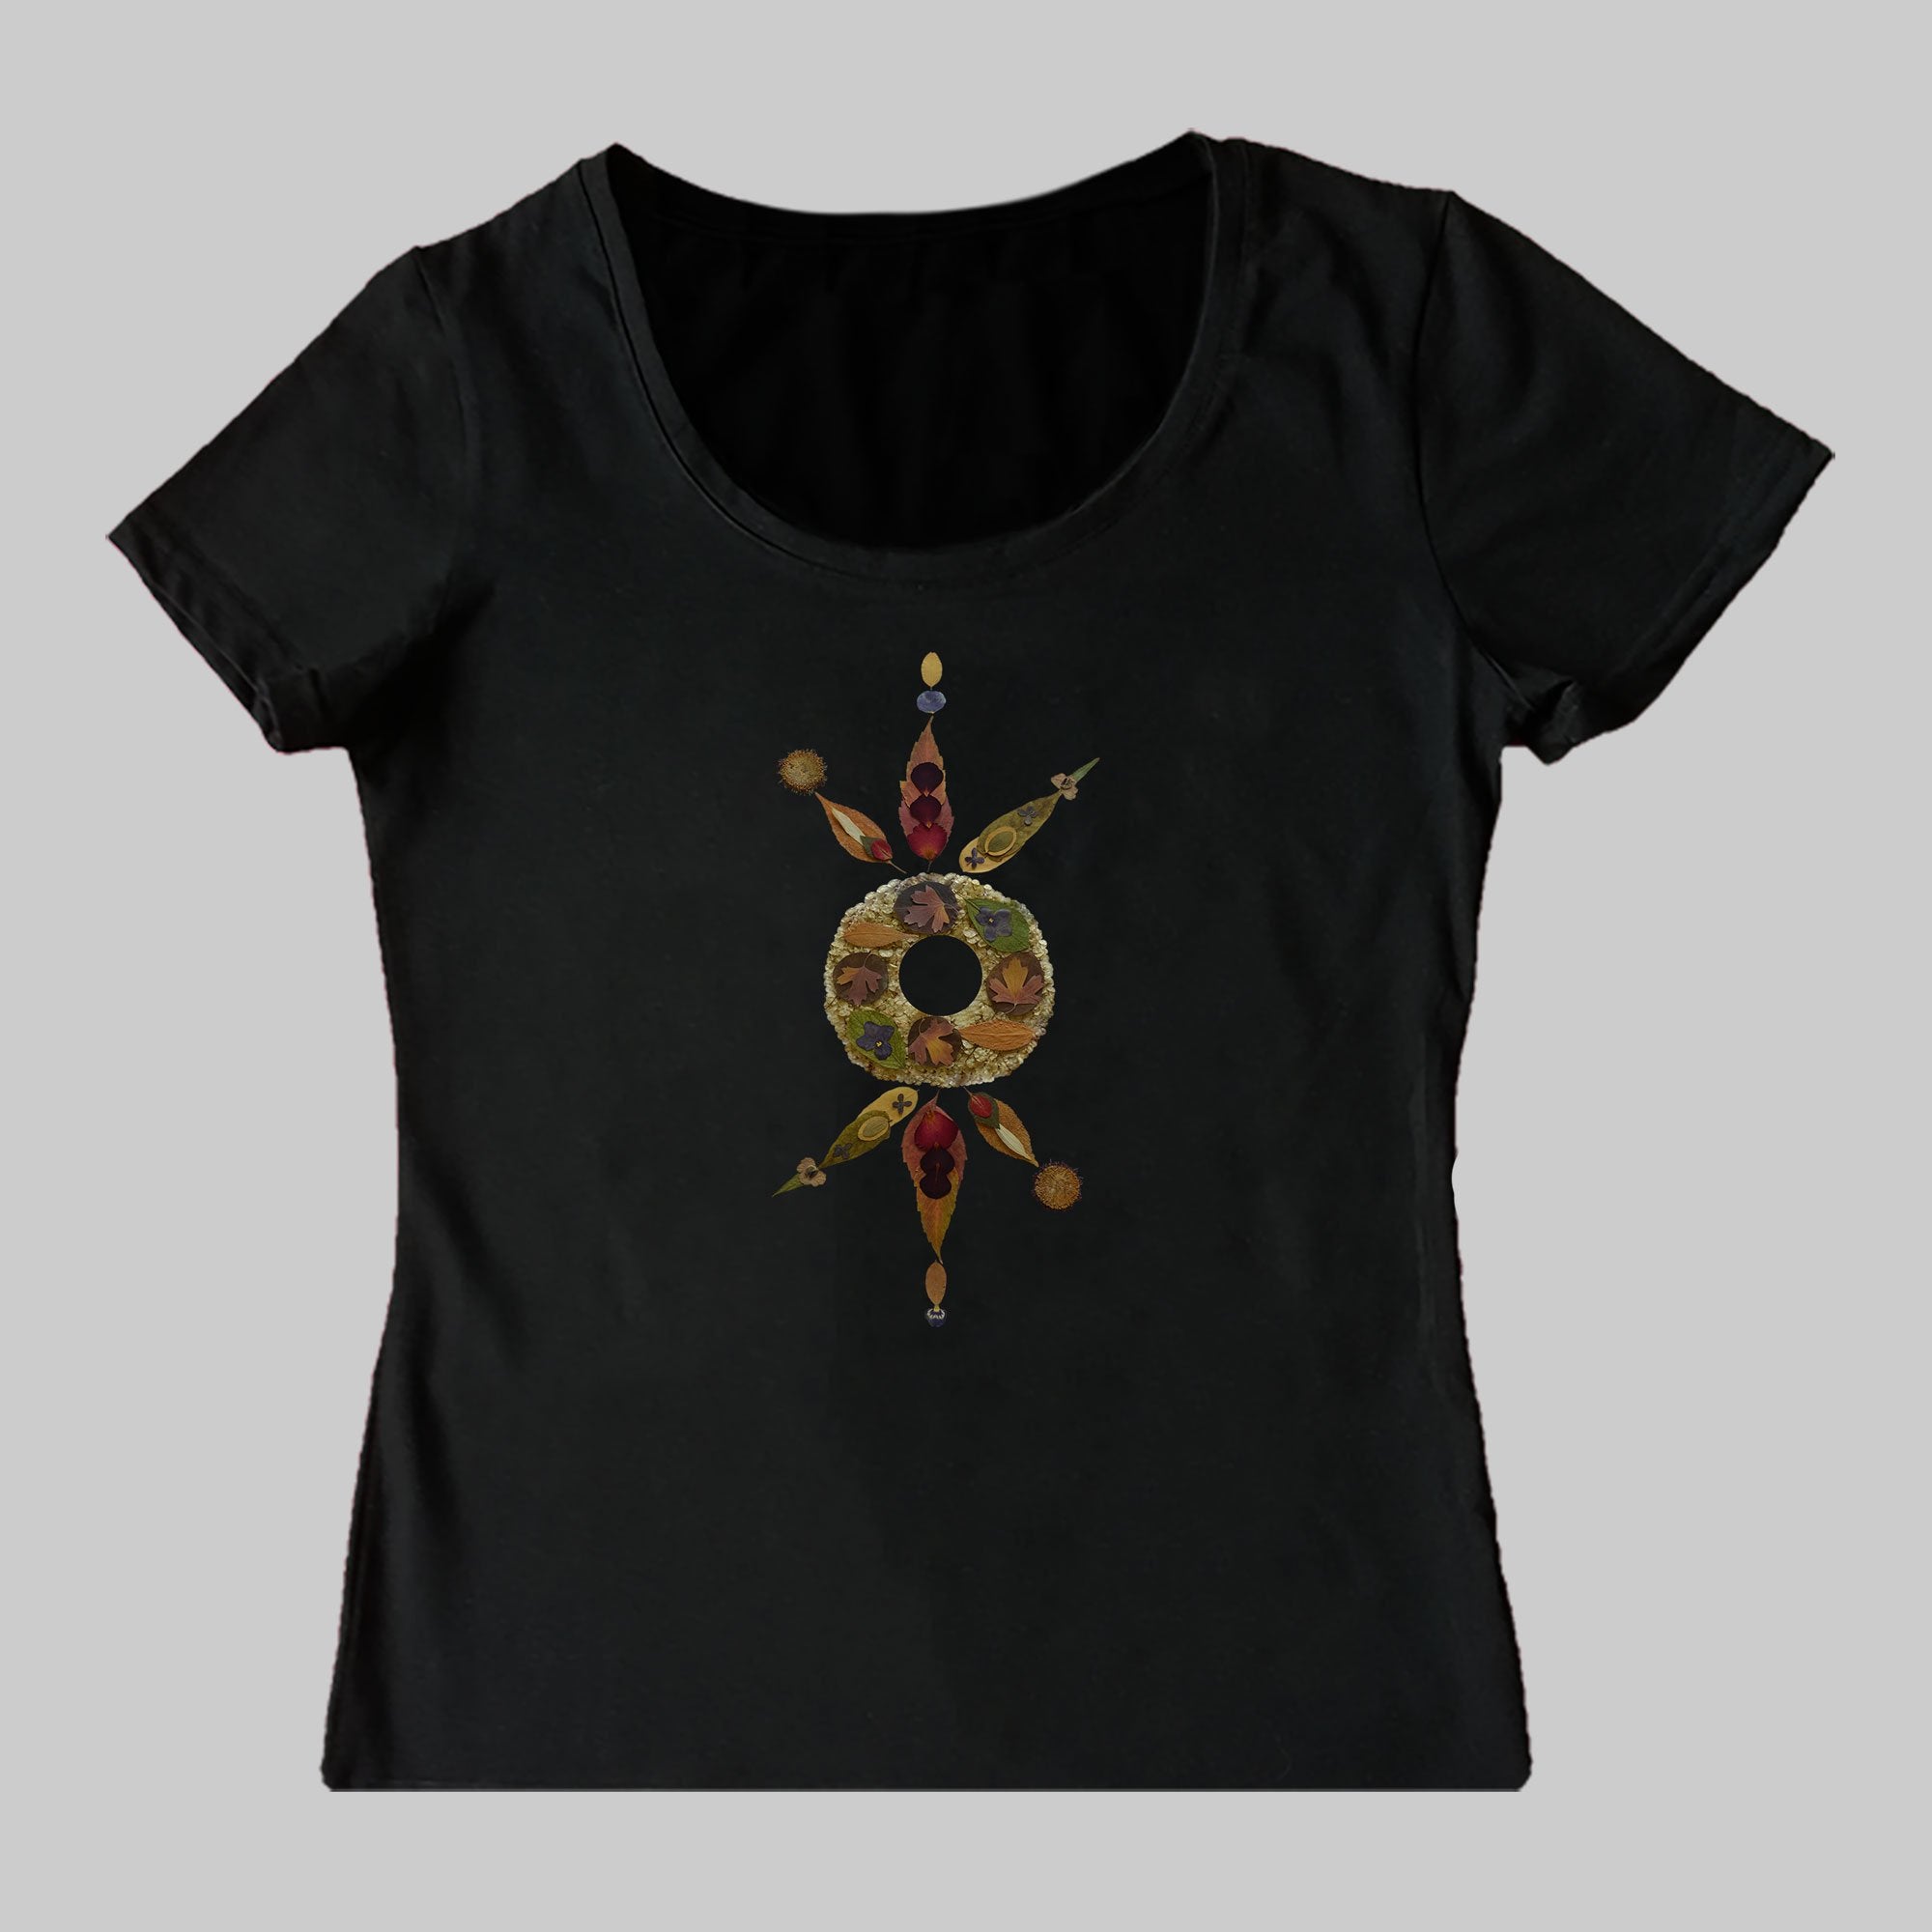 Circle-Like Ornament T-Shirt (Women's)